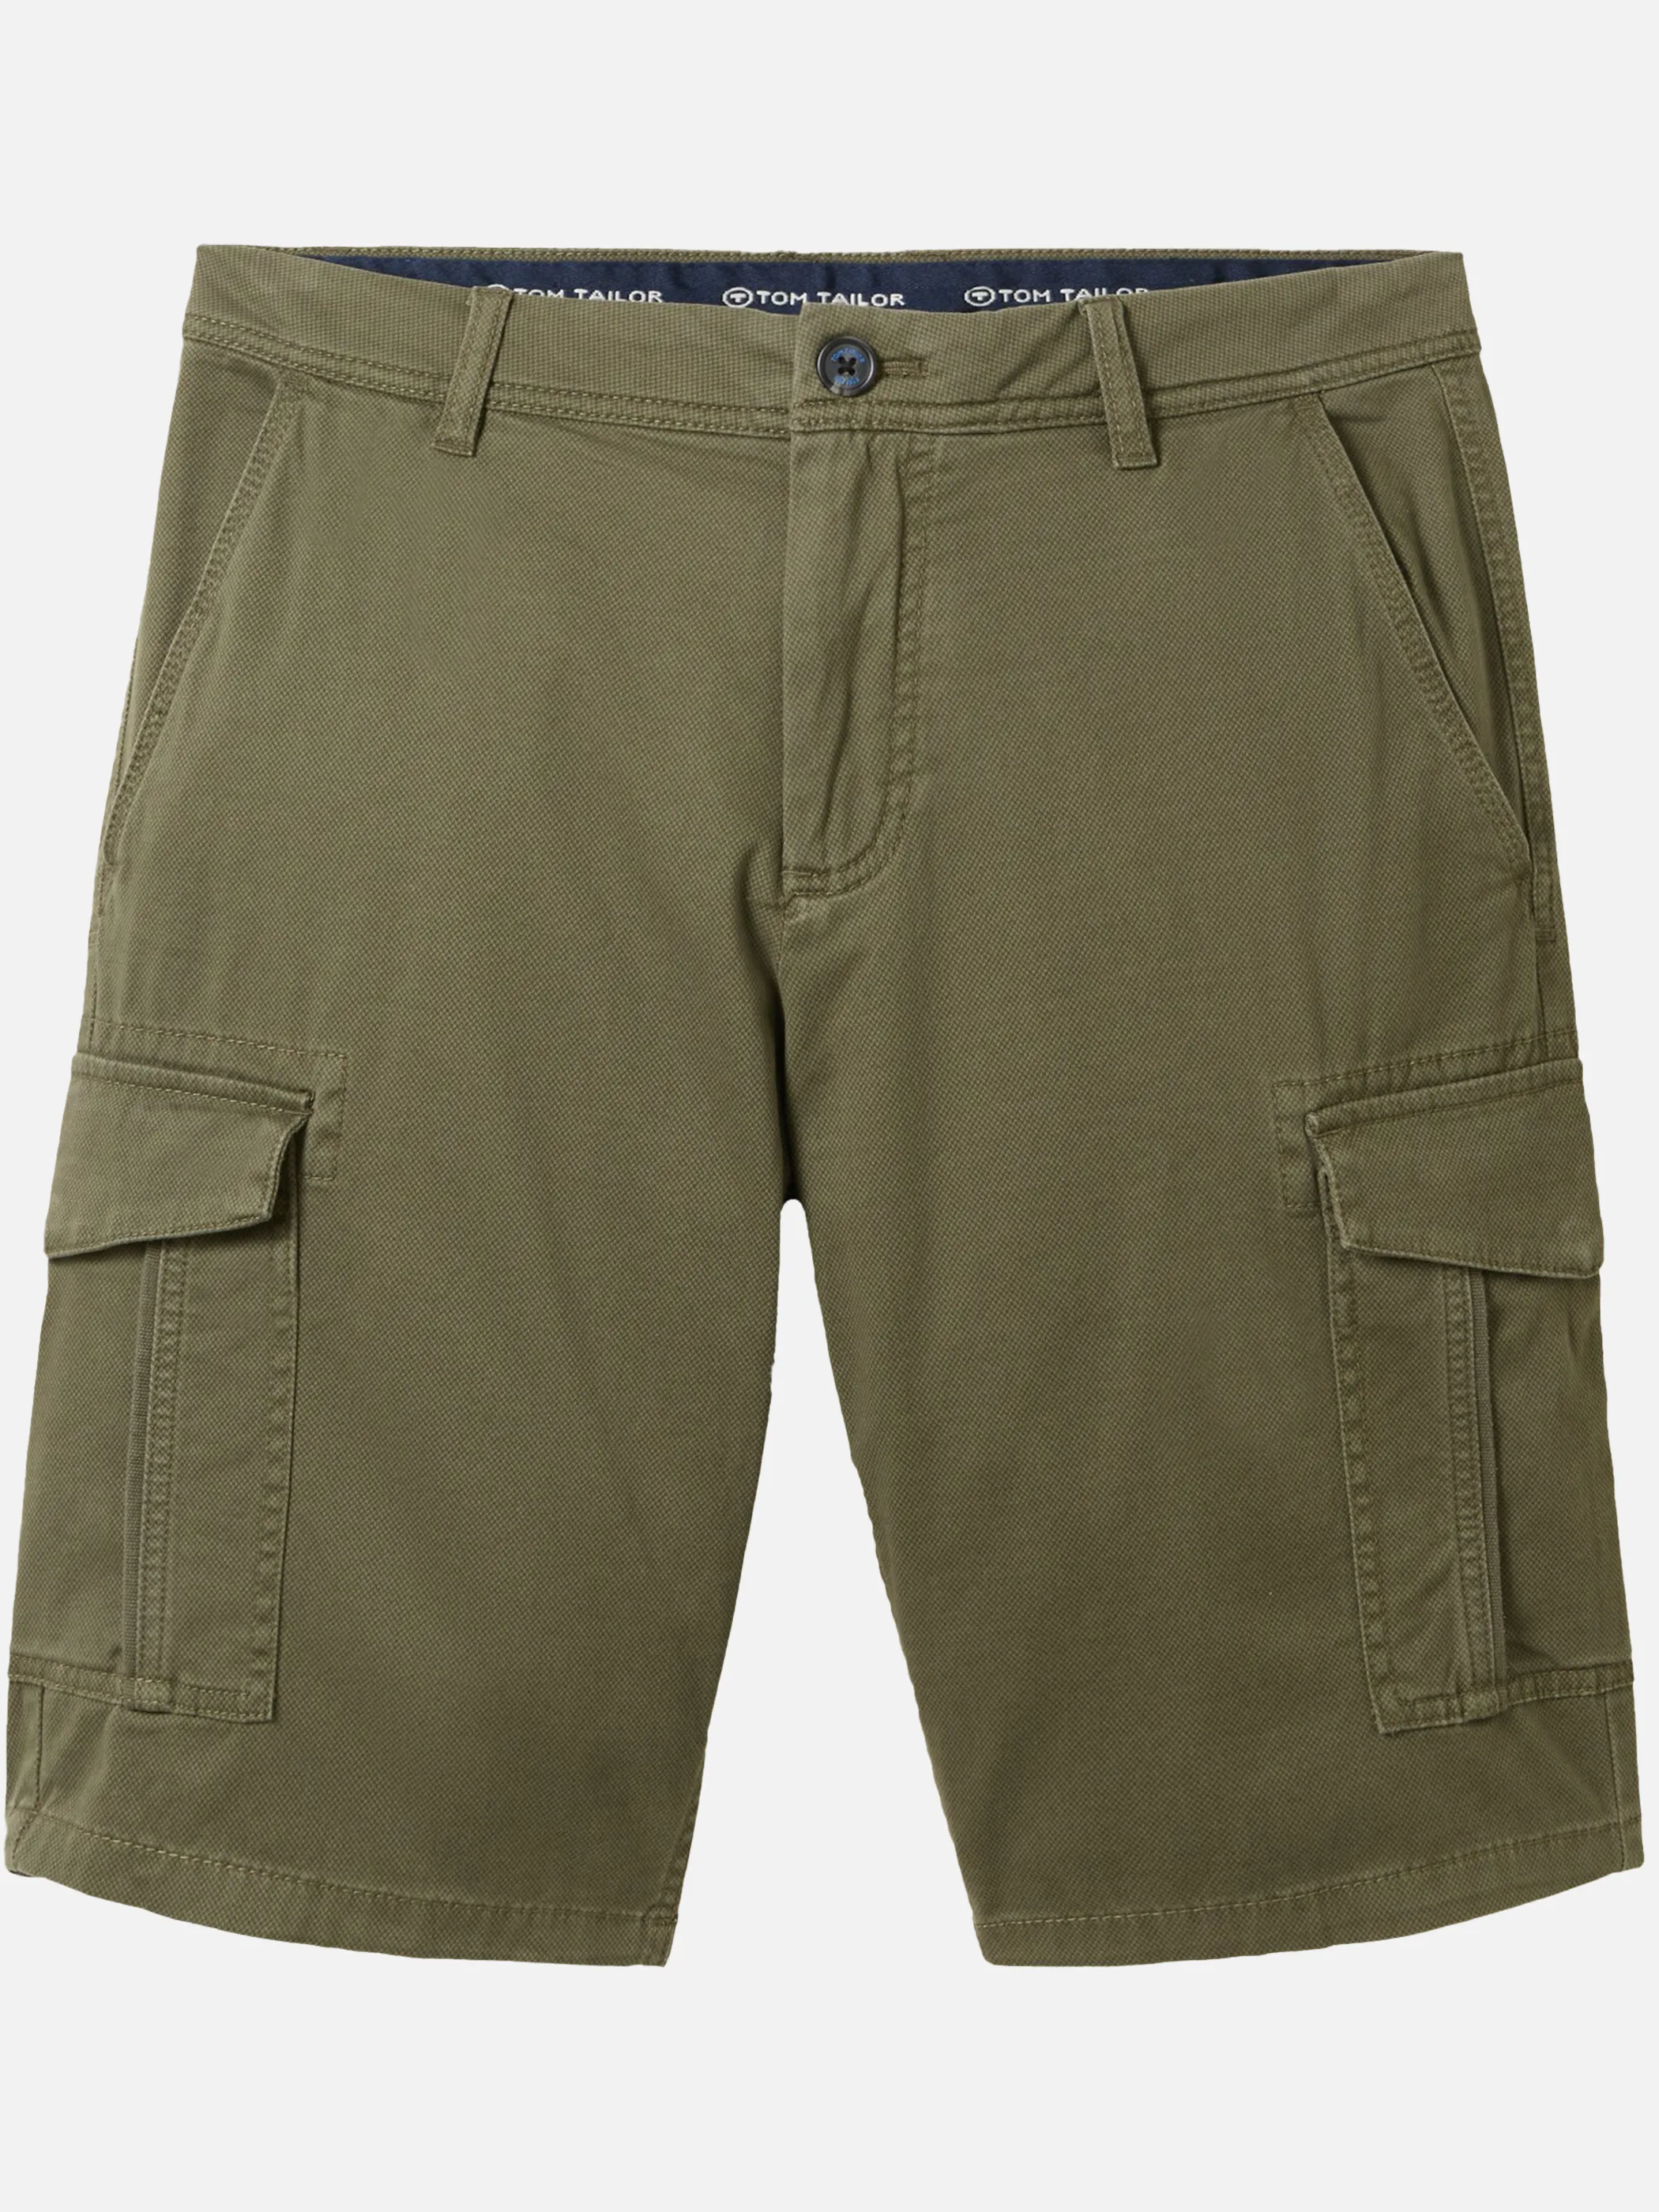 Tom Tailor 1040226 NOS regular printed cargo shorts Oliv 890941 34670 1